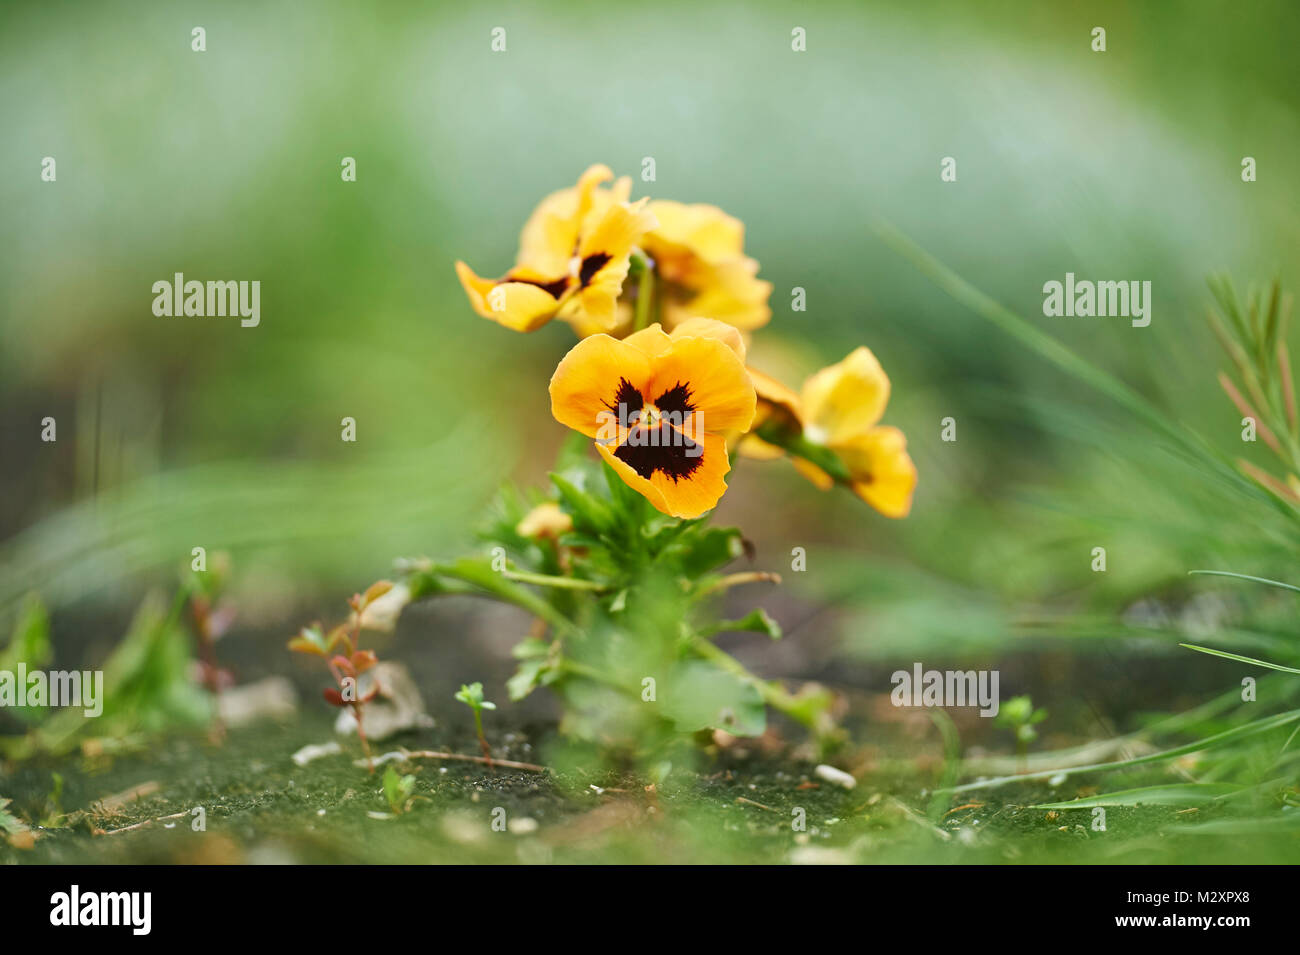 garden pansies, viola wittrockiana, blossom, close-up Stock Photo